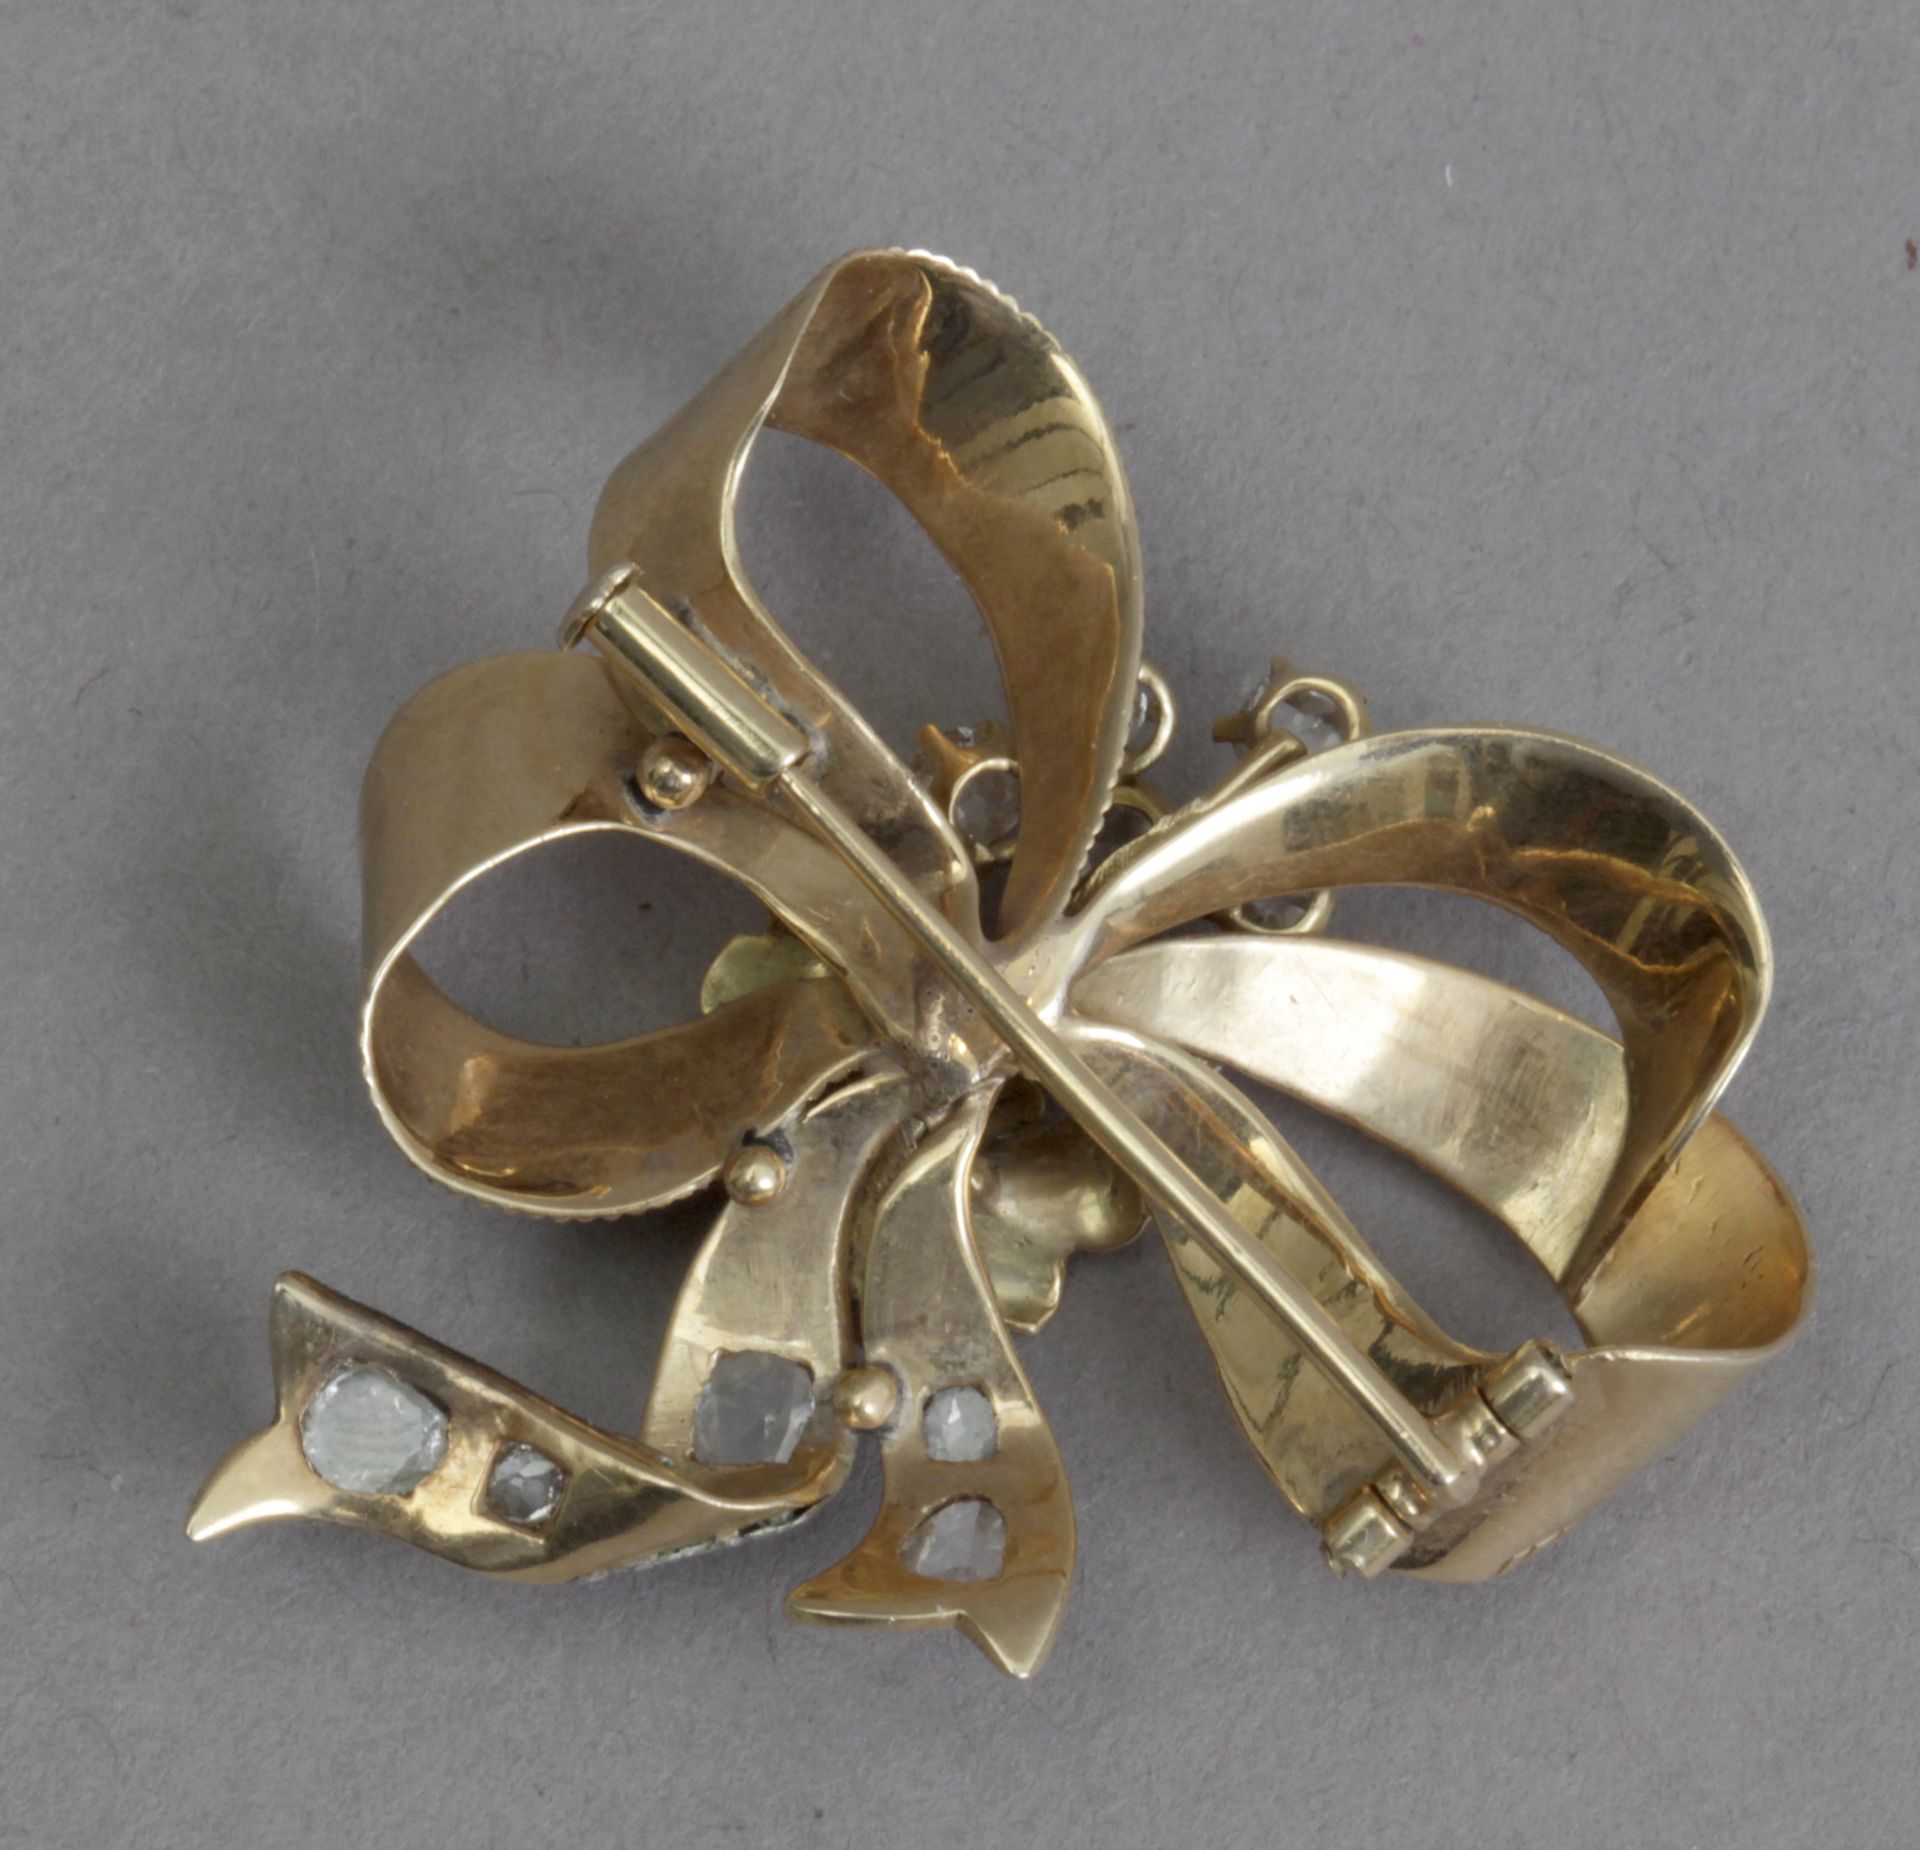 A 19th century diamond brooch - Image 4 of 4